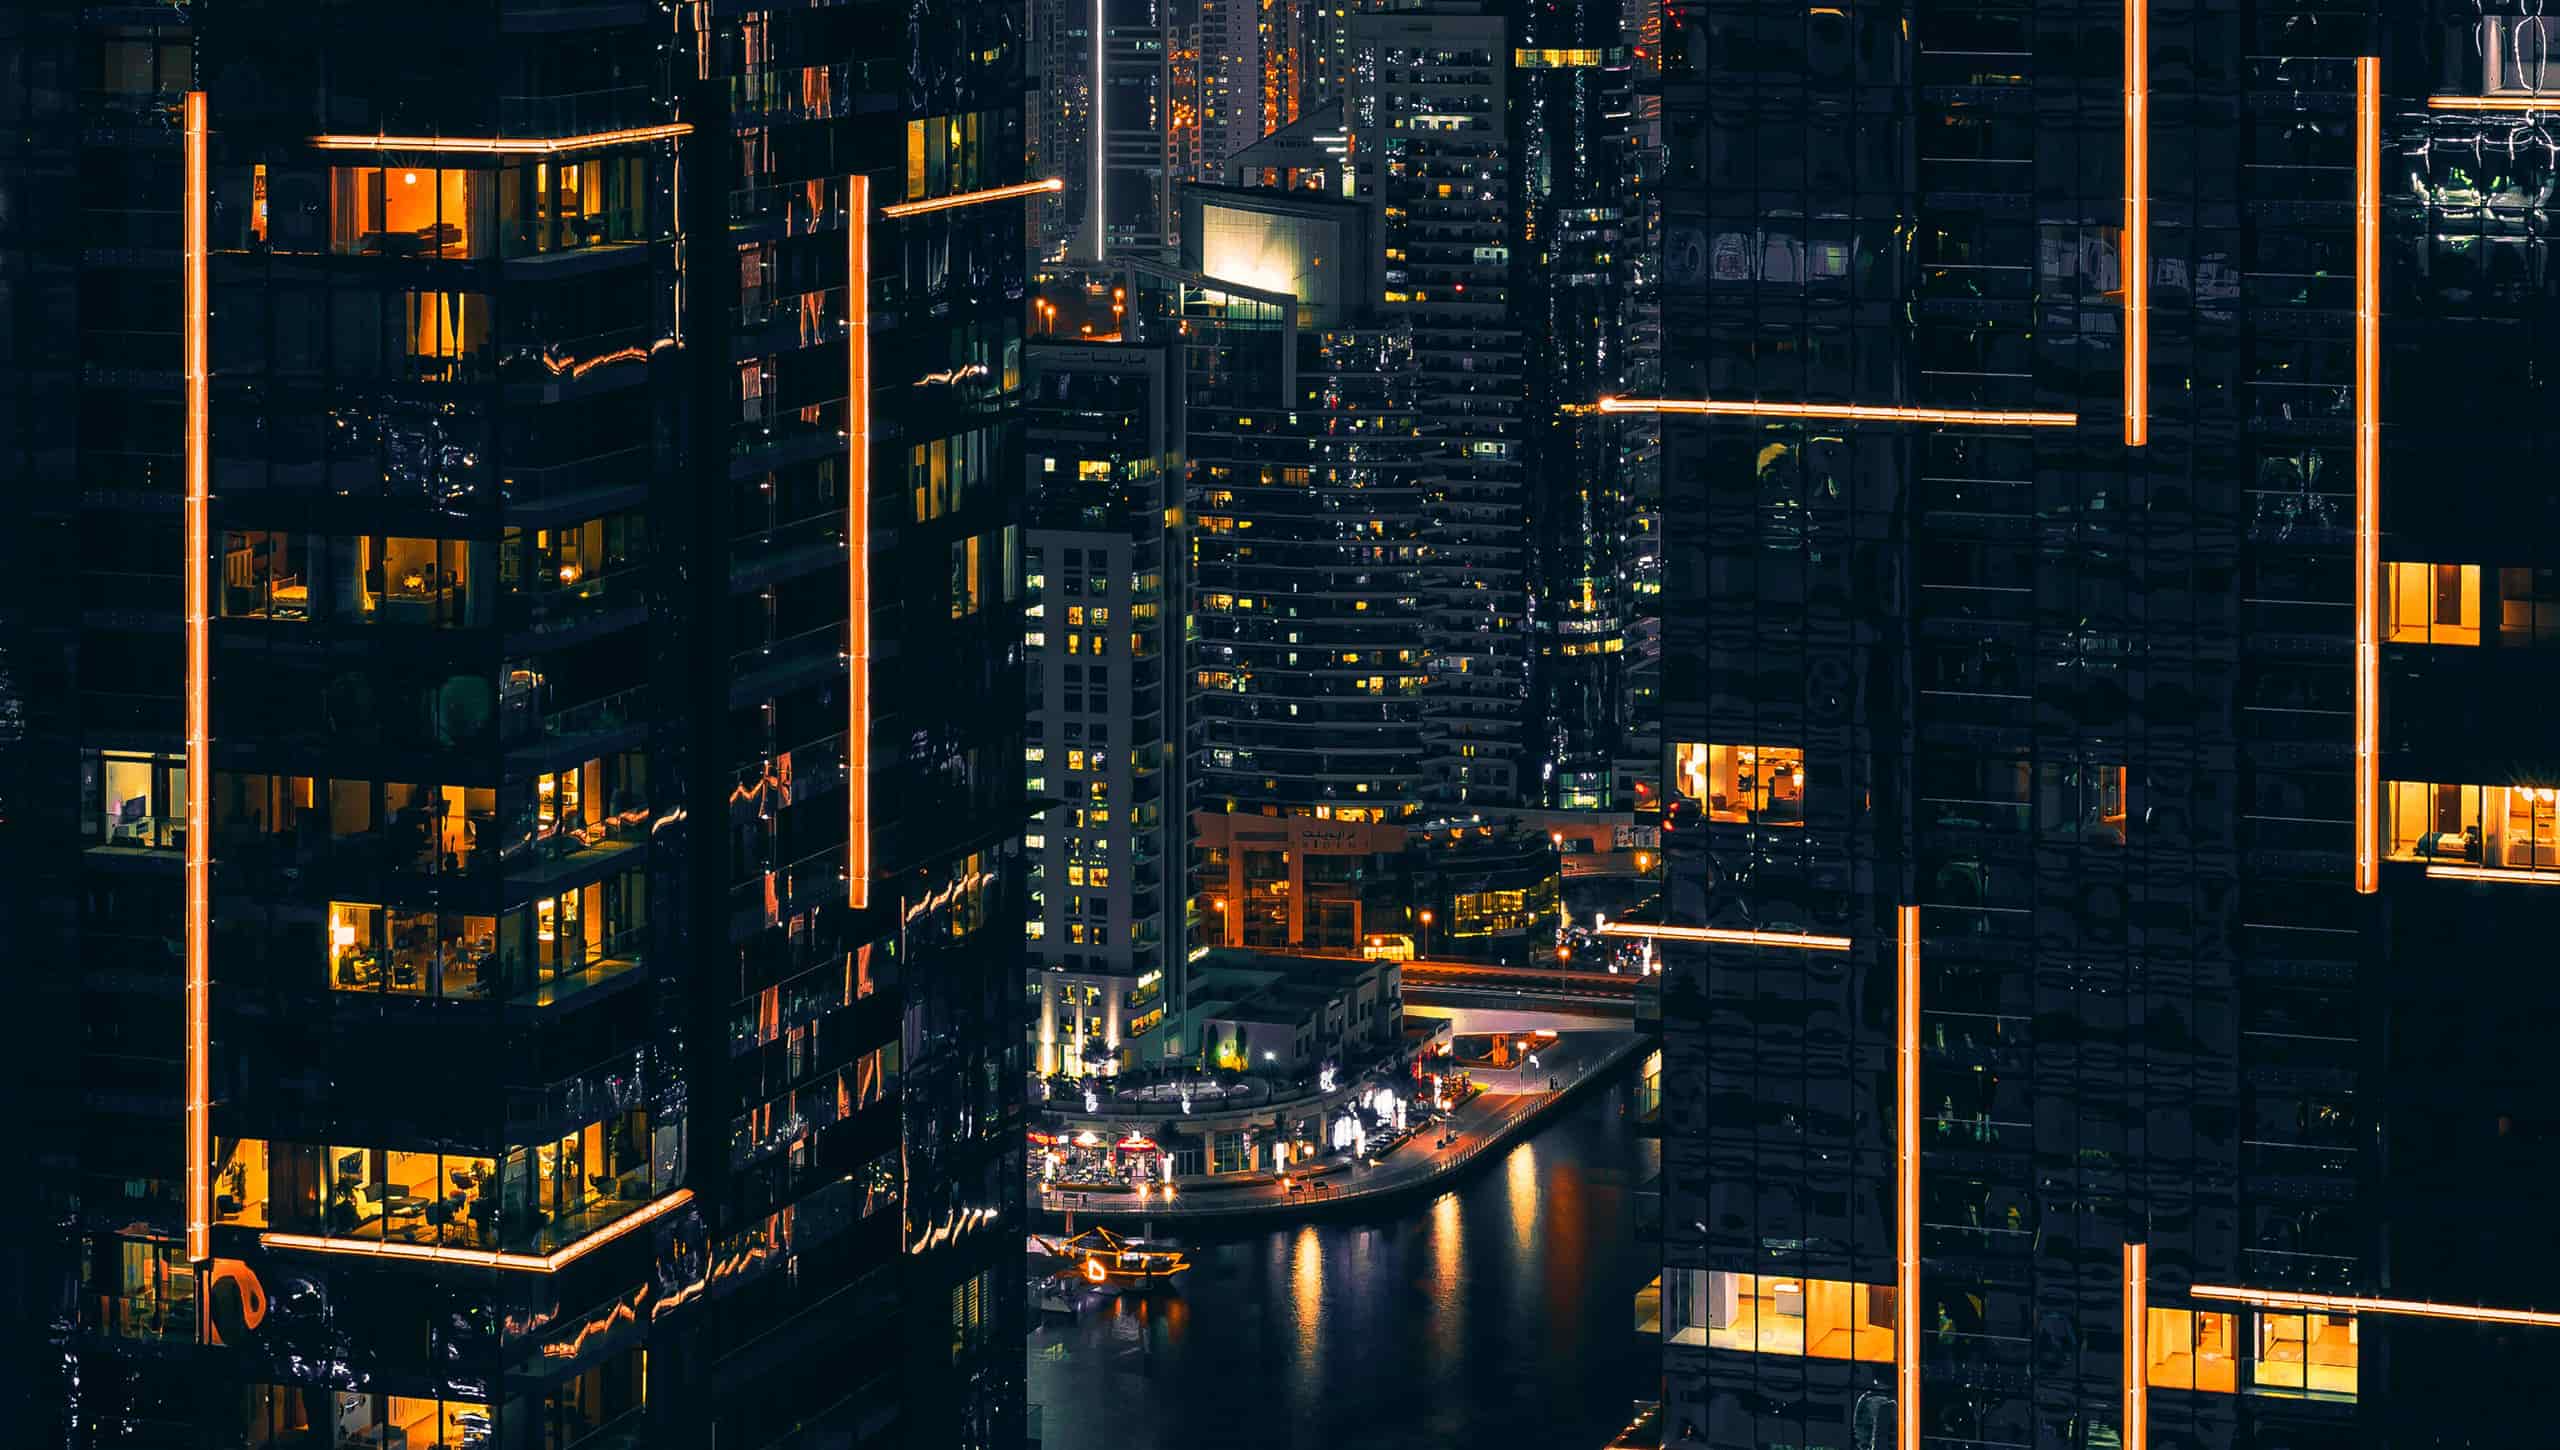 A city skyline at night